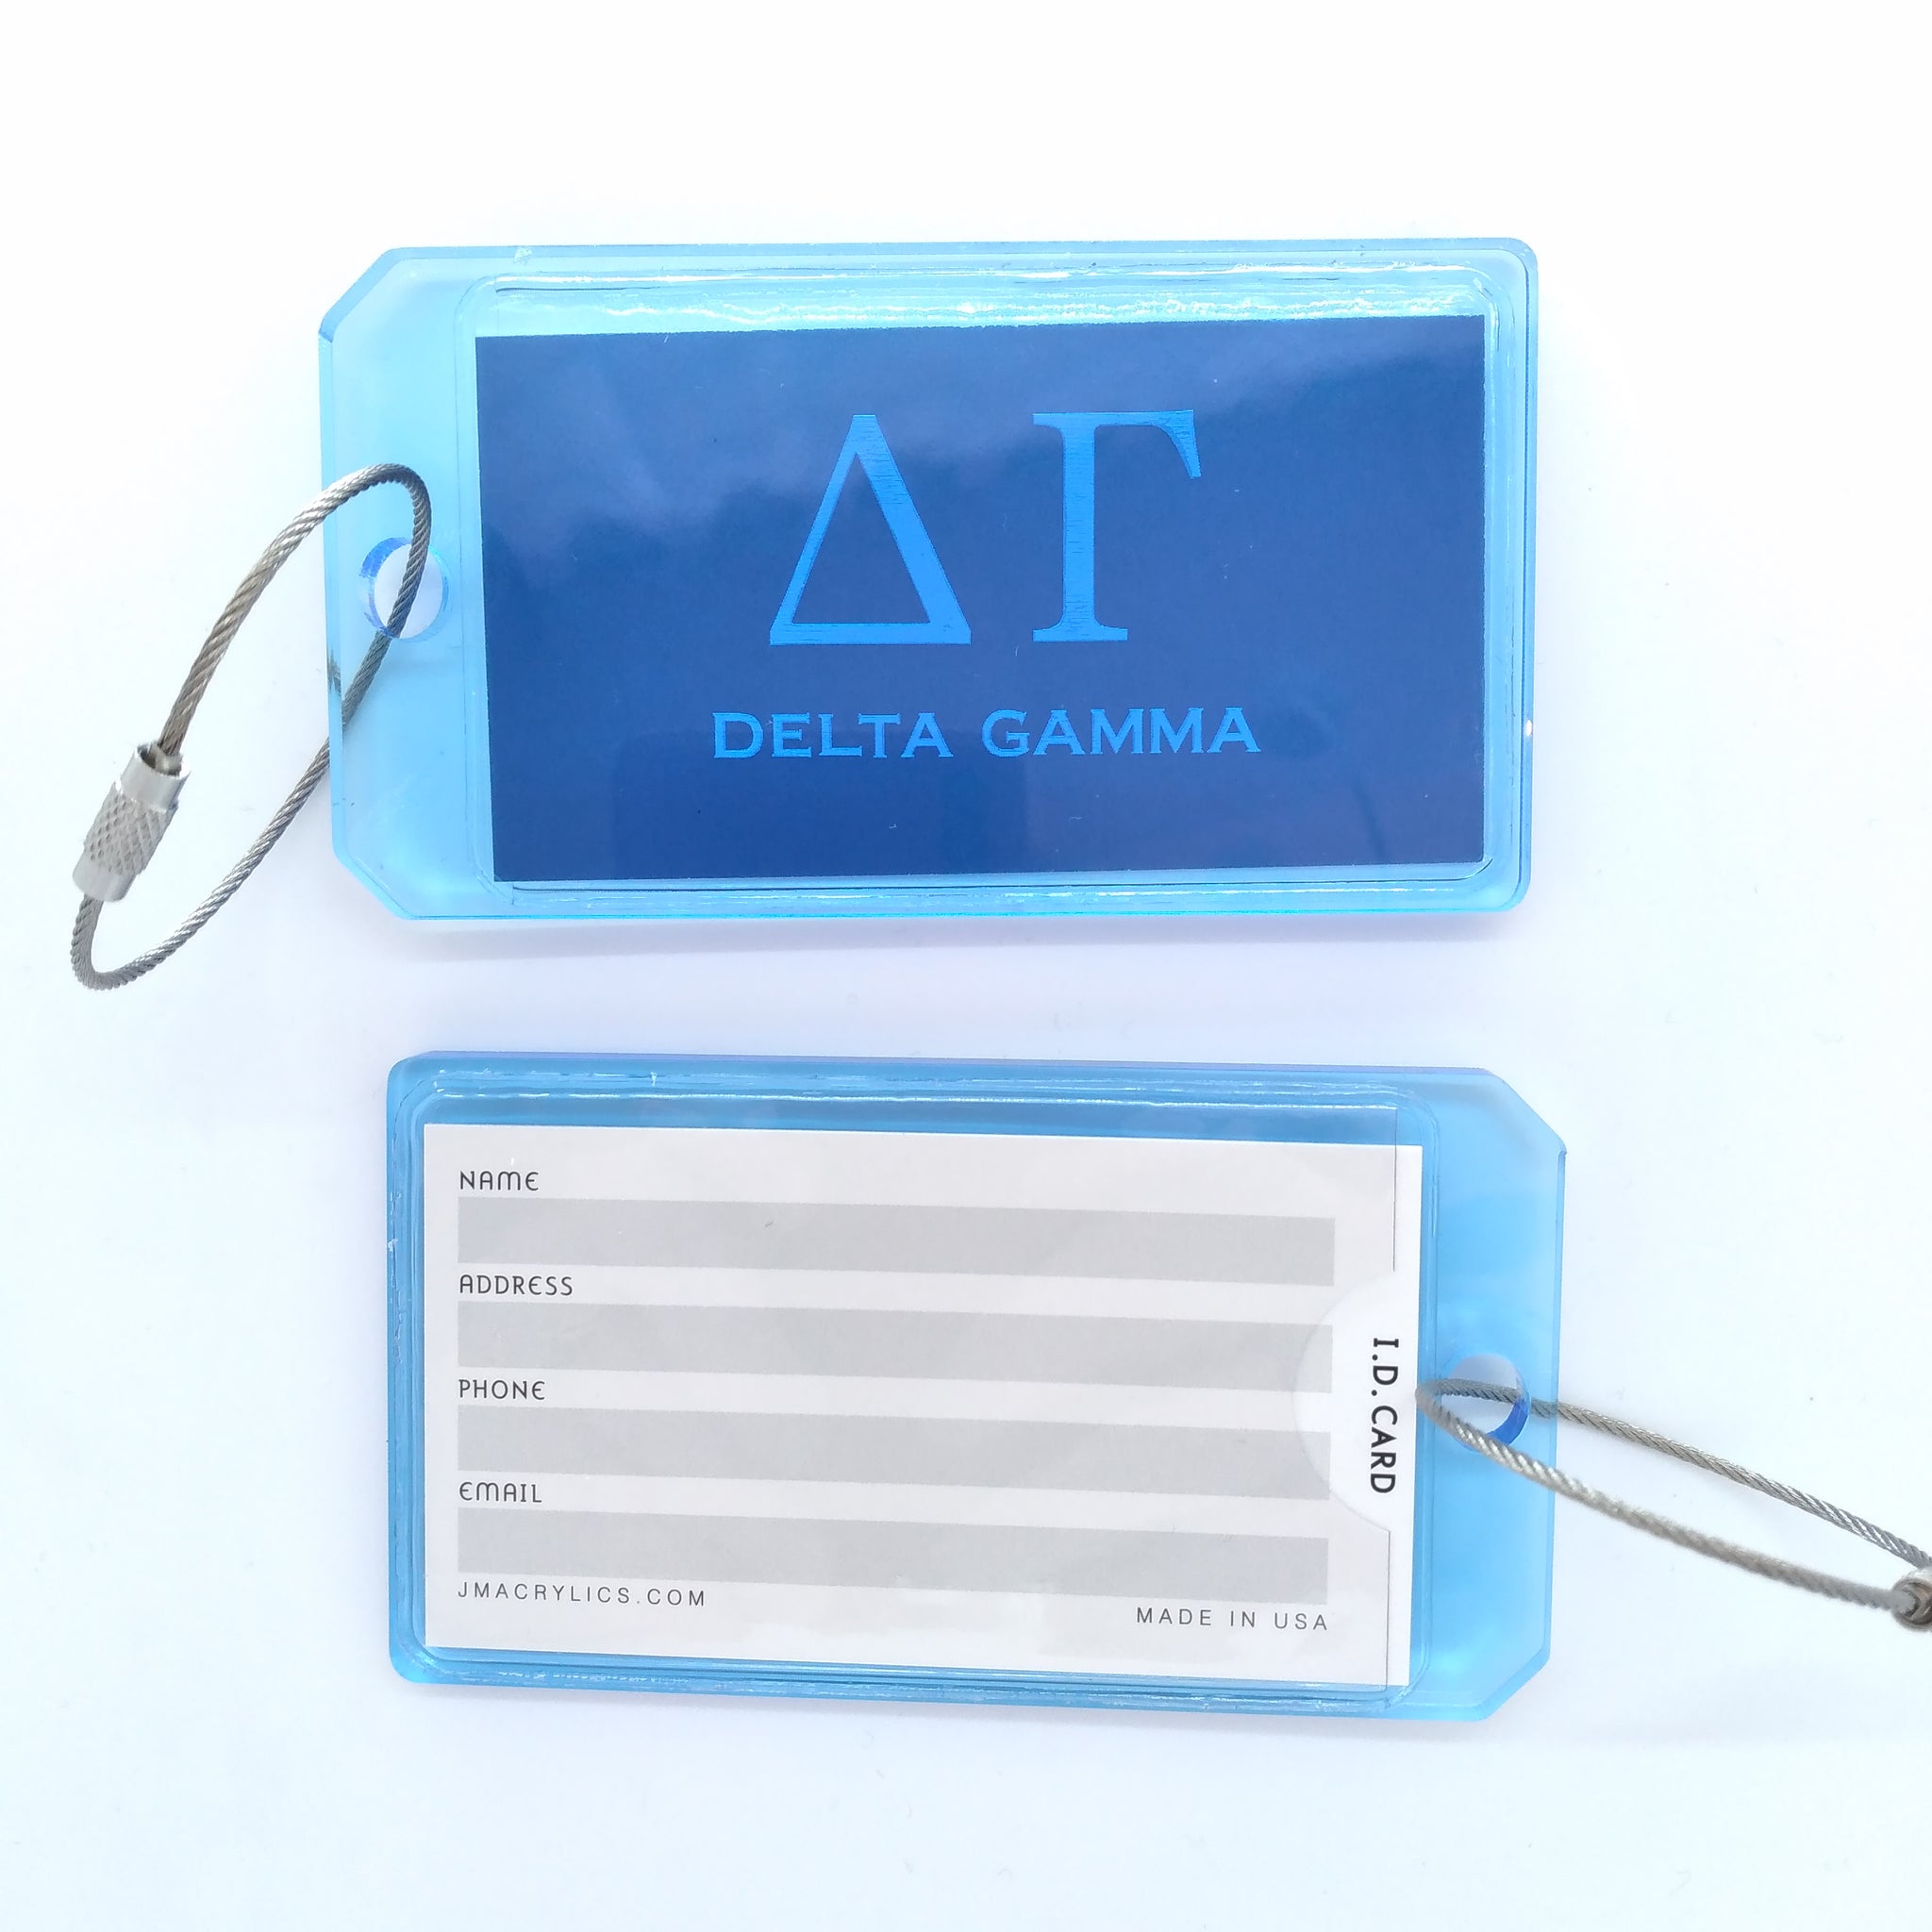 Acrylic Luggage Tag - Delta Gamma